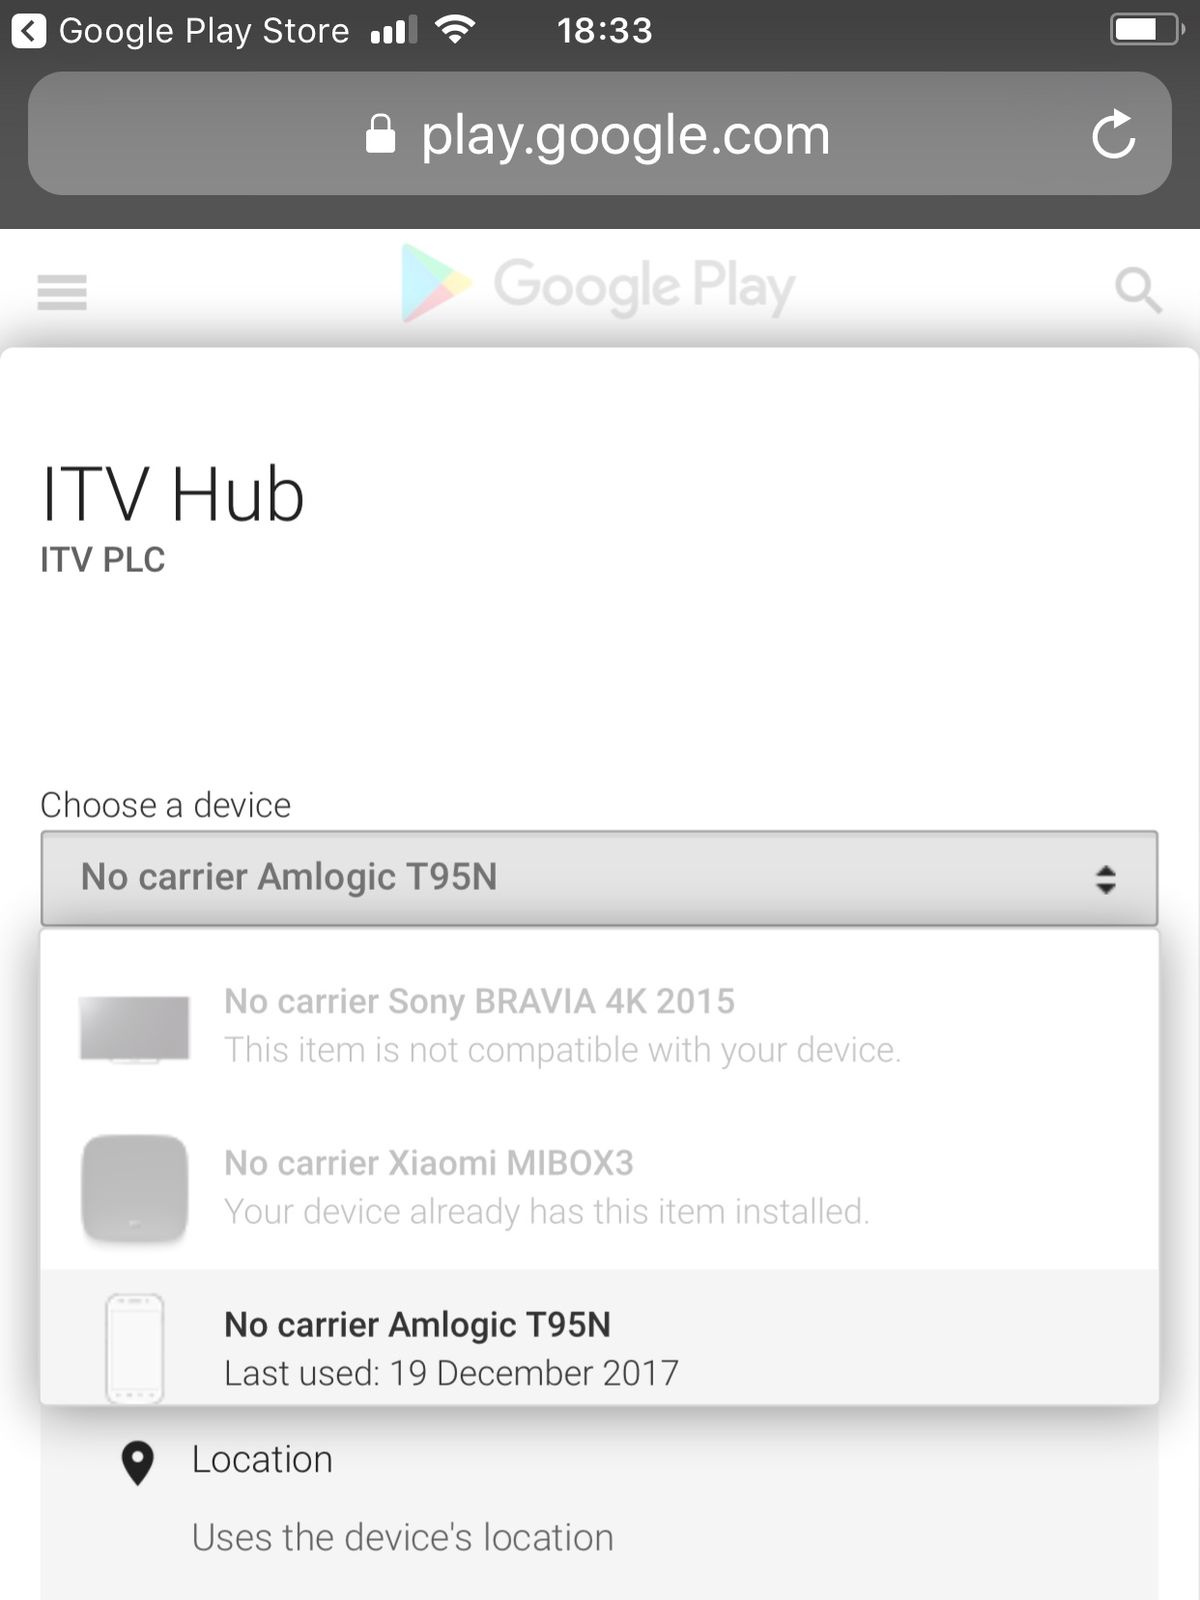 Sony TV not compatible, MiBox already installed